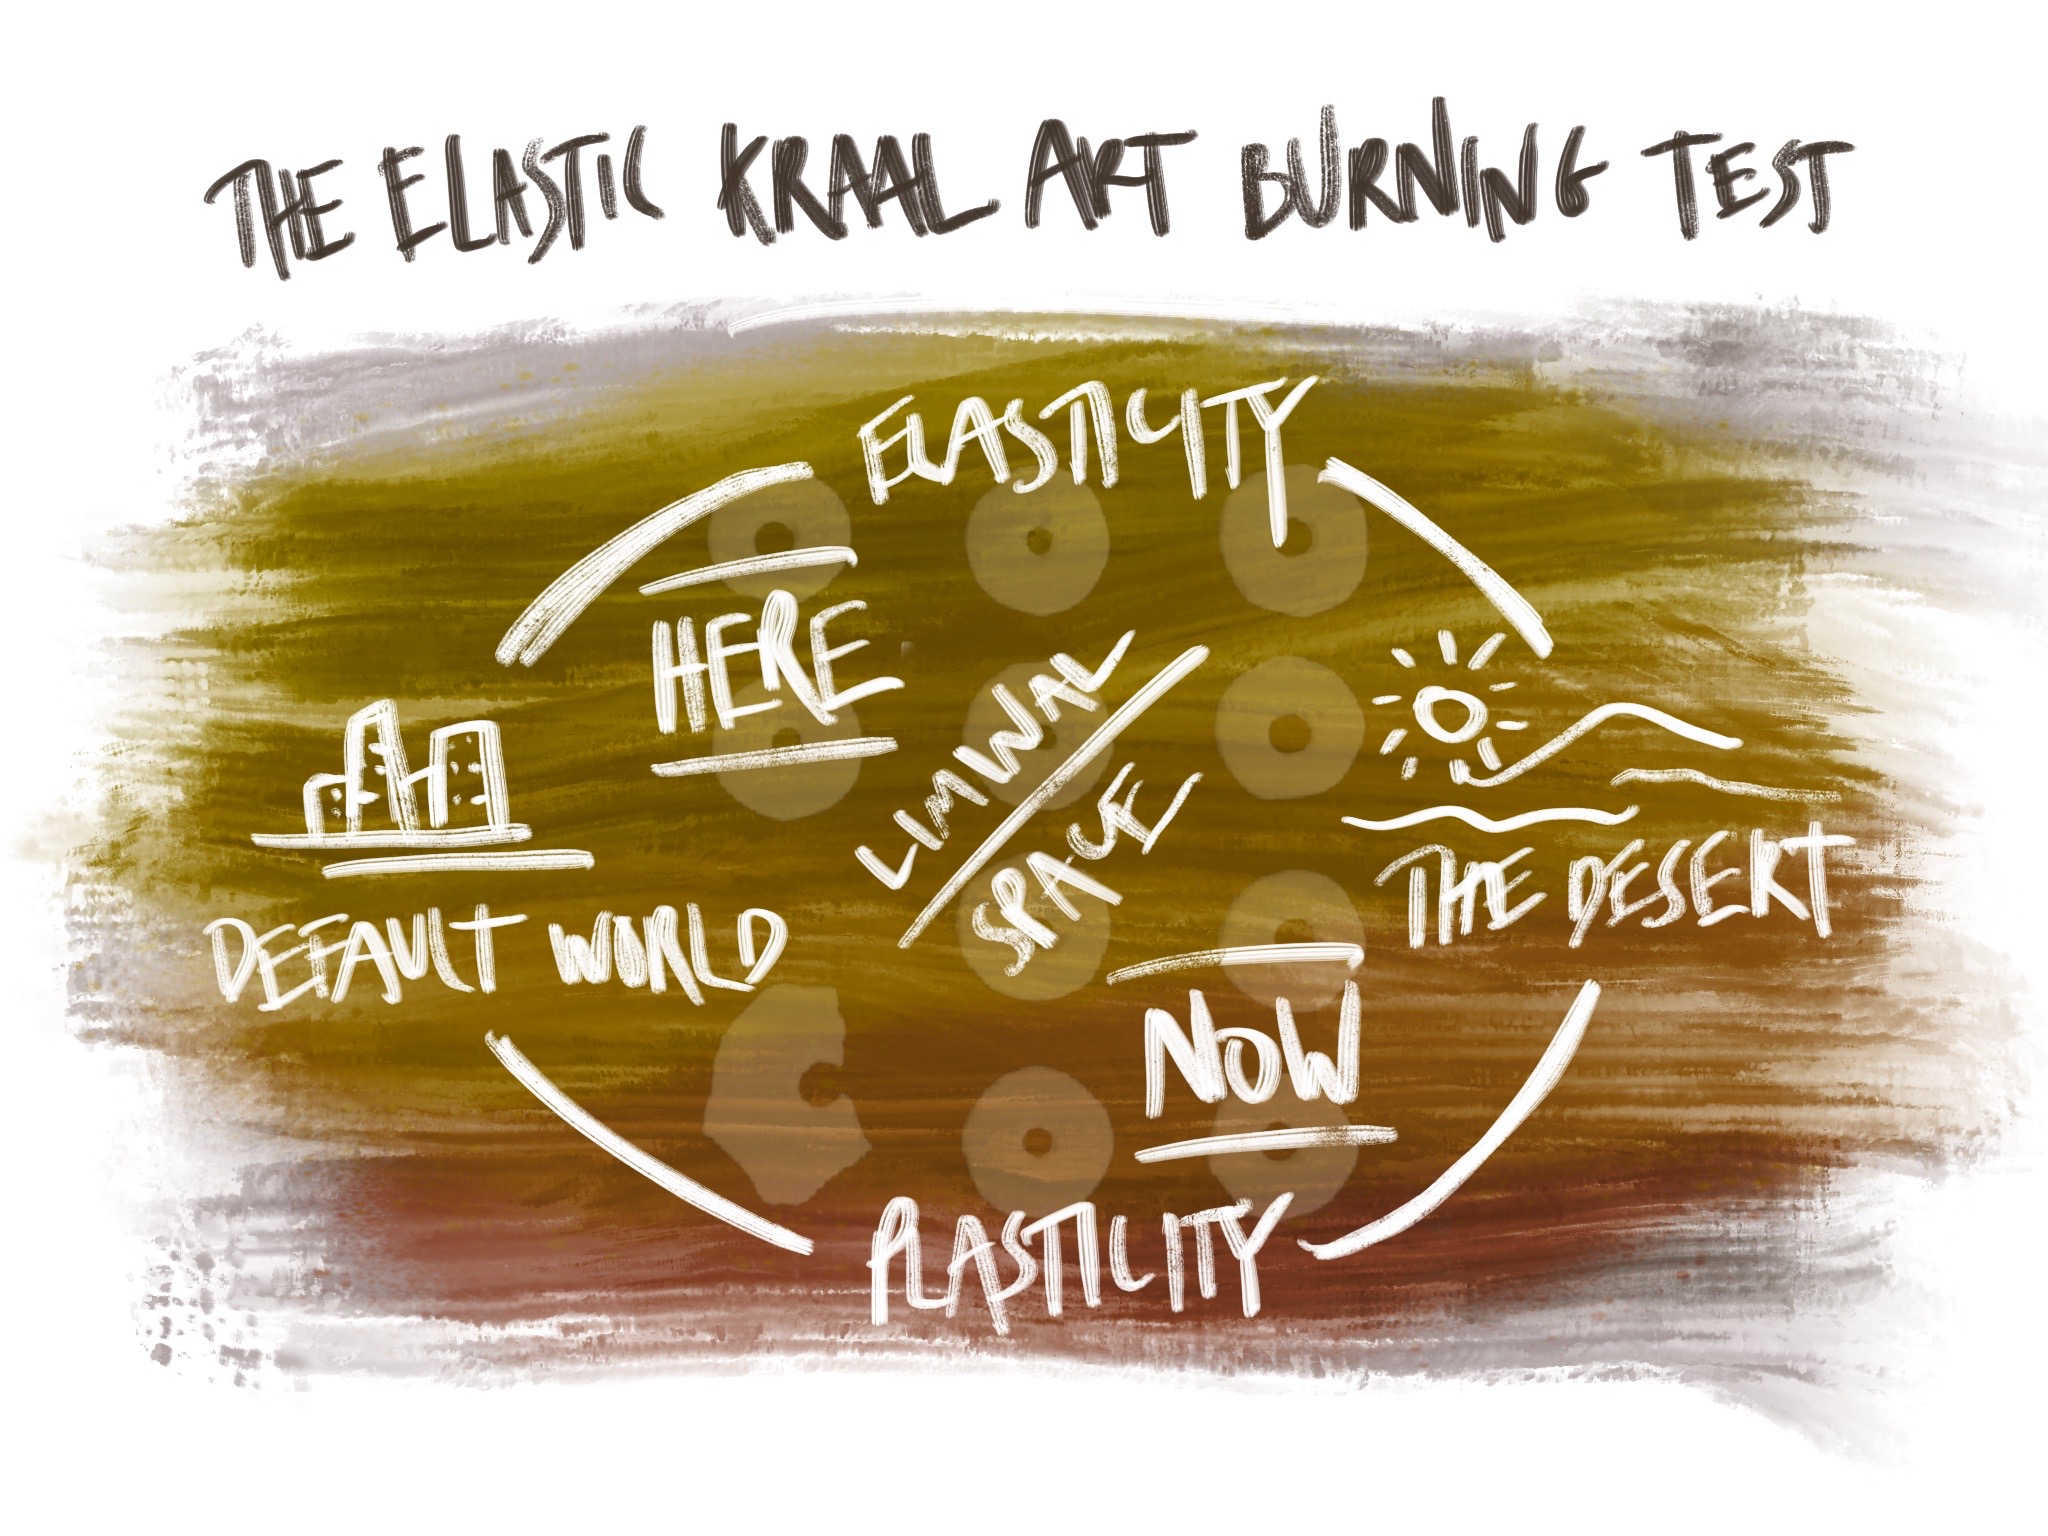 2022 Theme – The Elastic Kraal-Art Burning Test